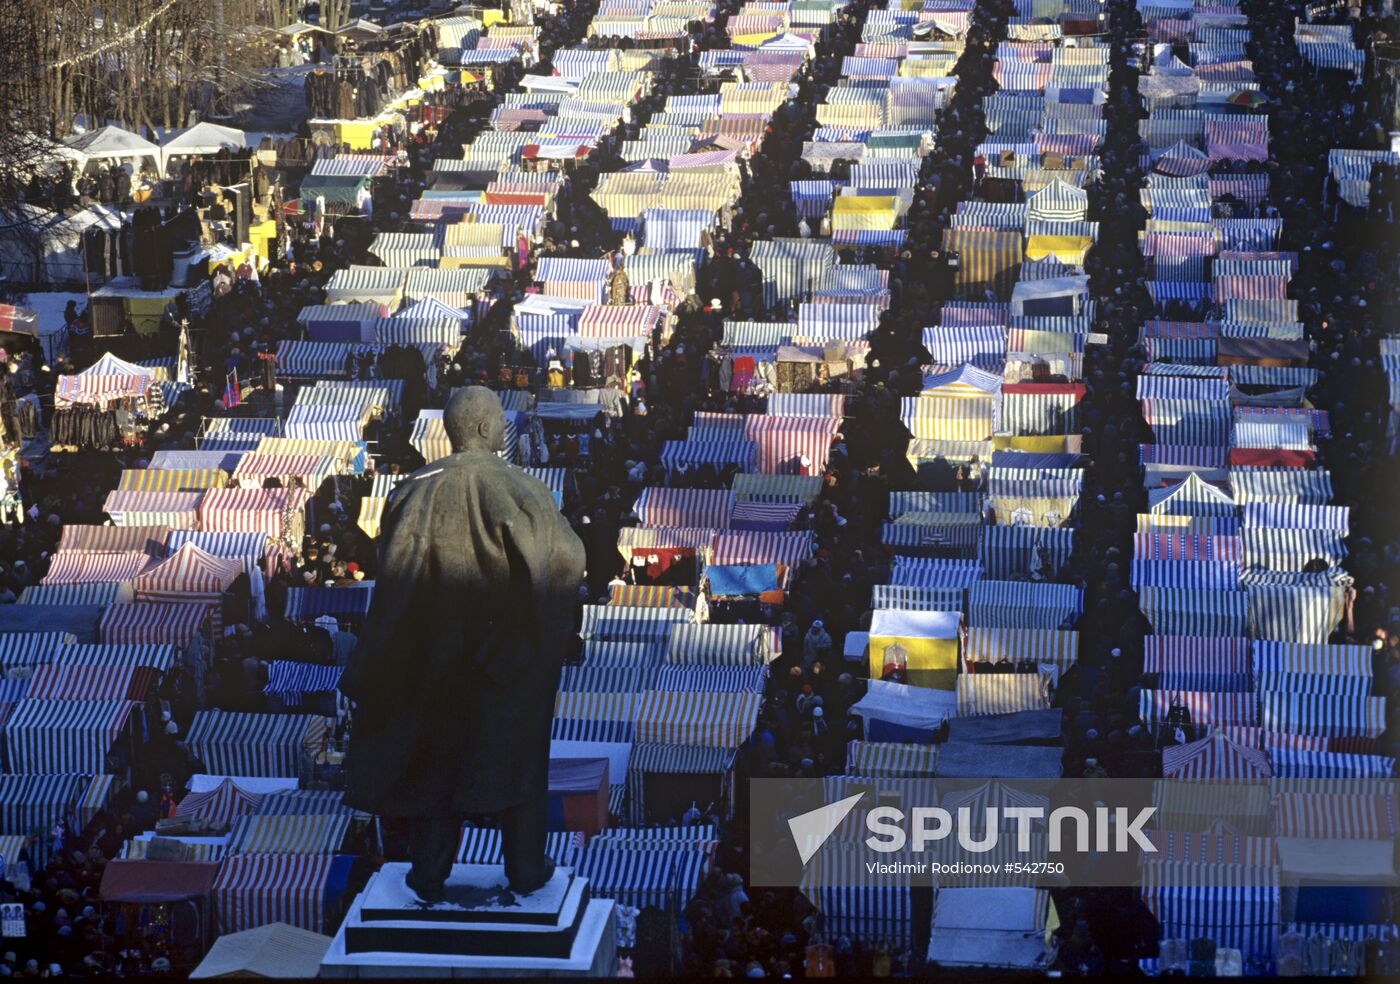 Market in Luzhniki